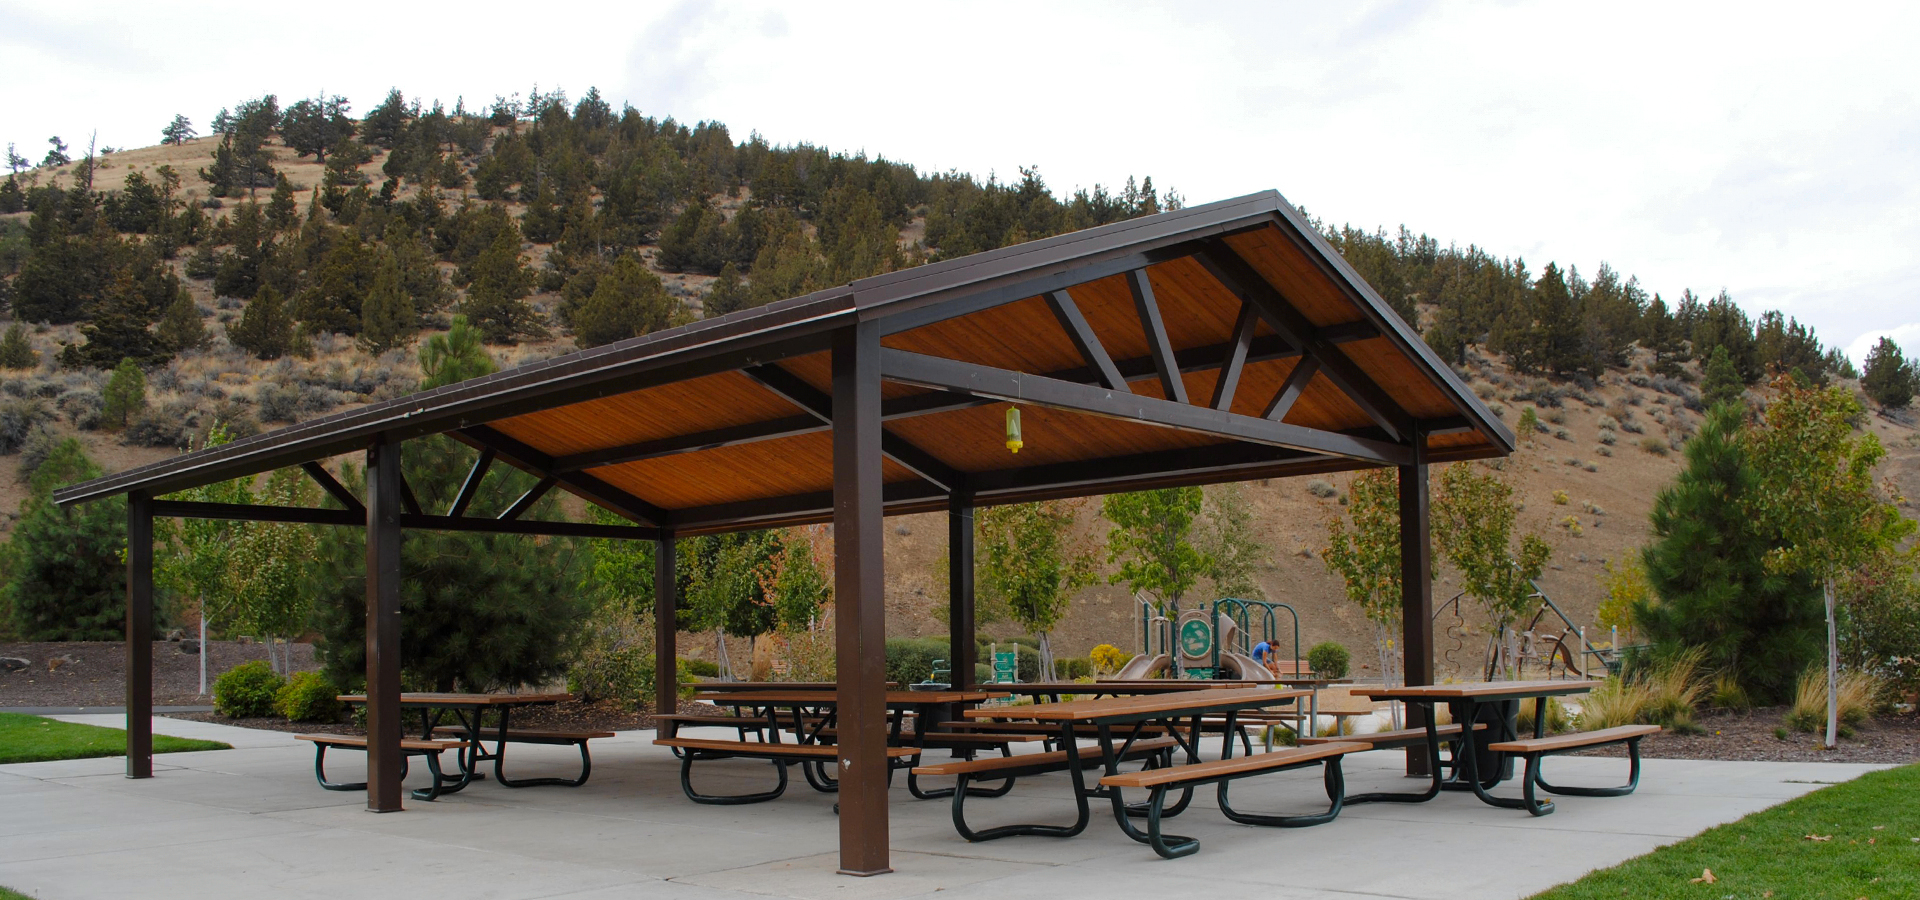 The picnic shelter at Pilot Butte Park.